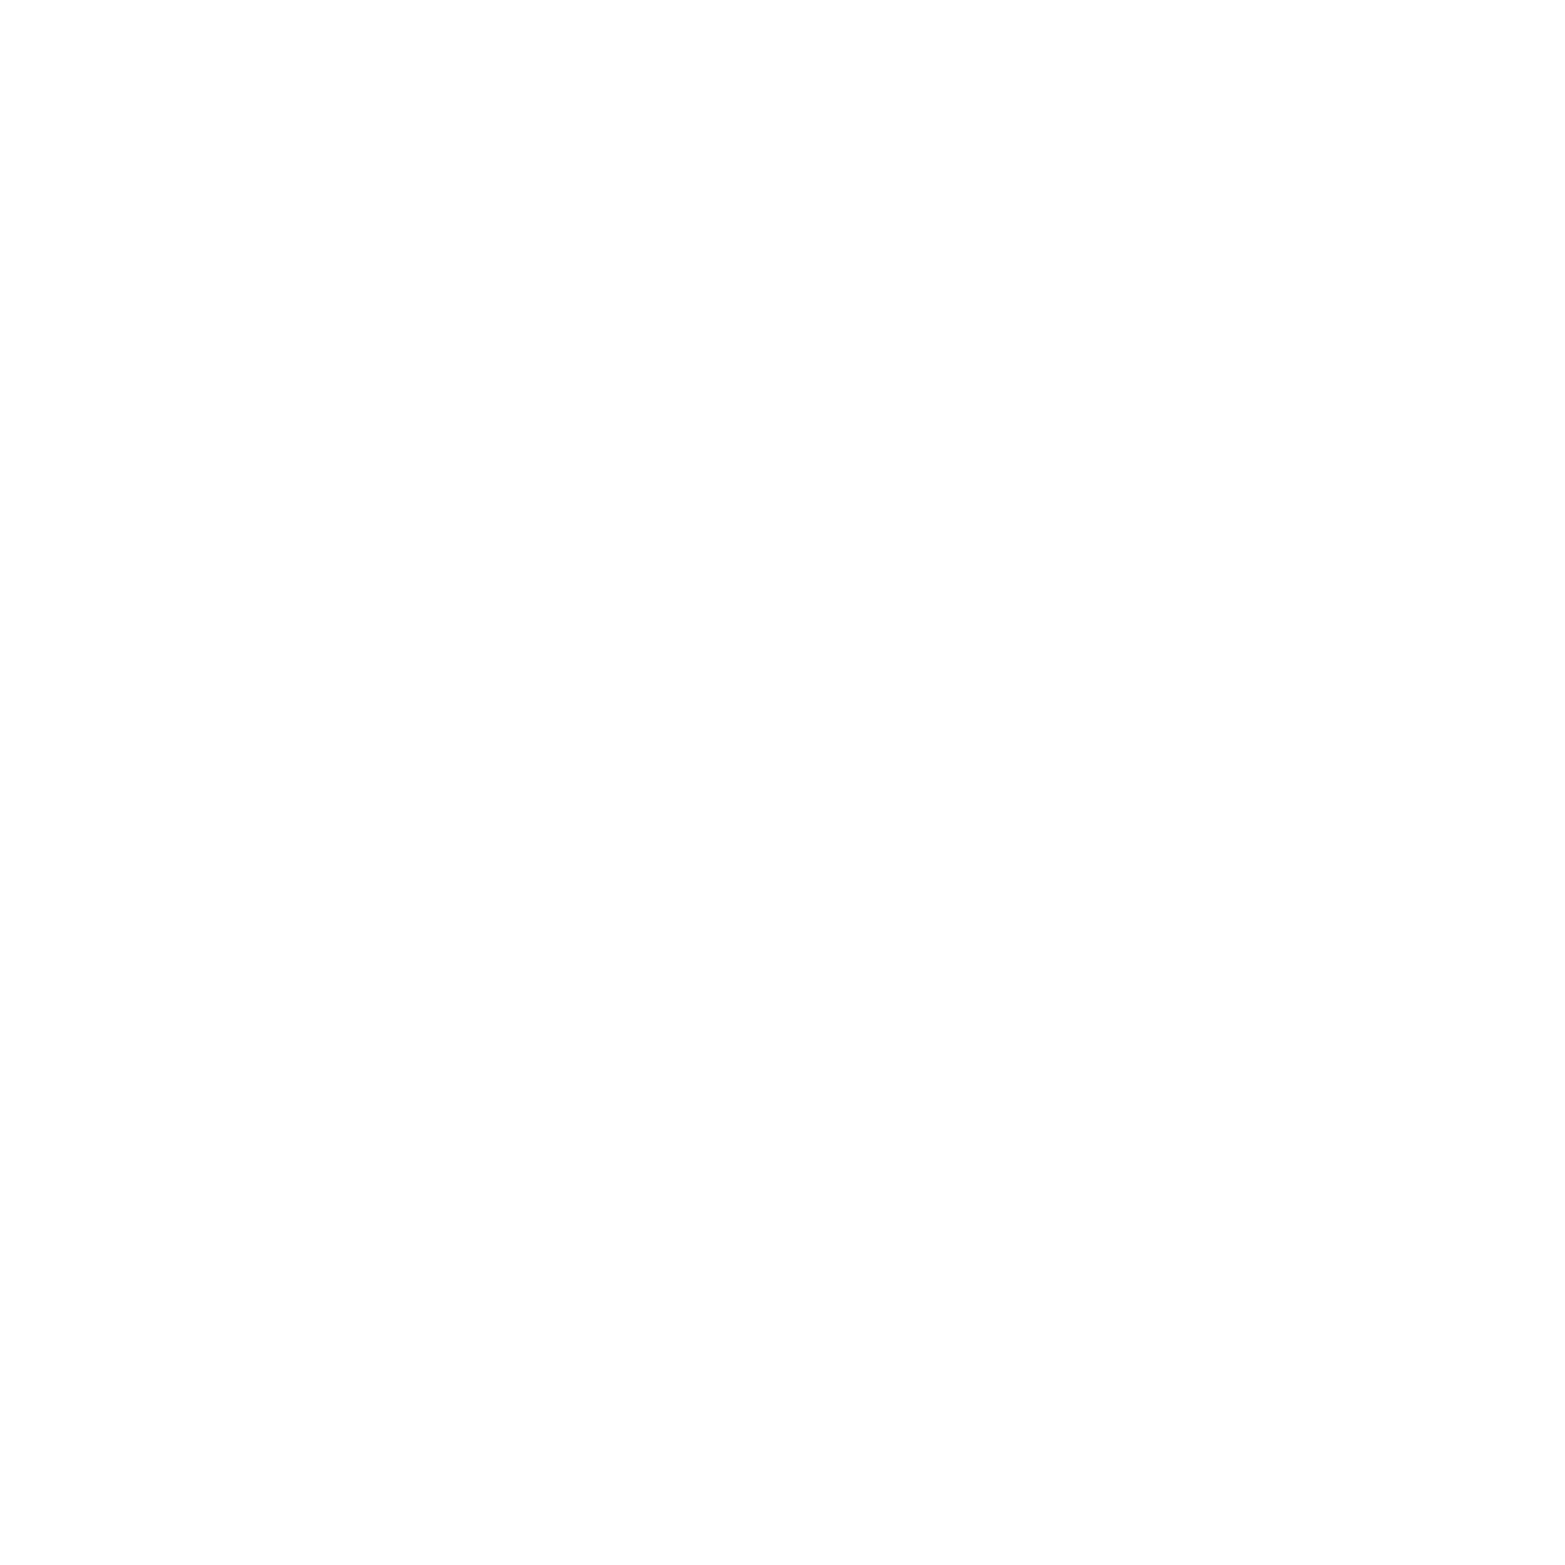 Rexford Industrial logo for dark backgrounds (transparent PNG)